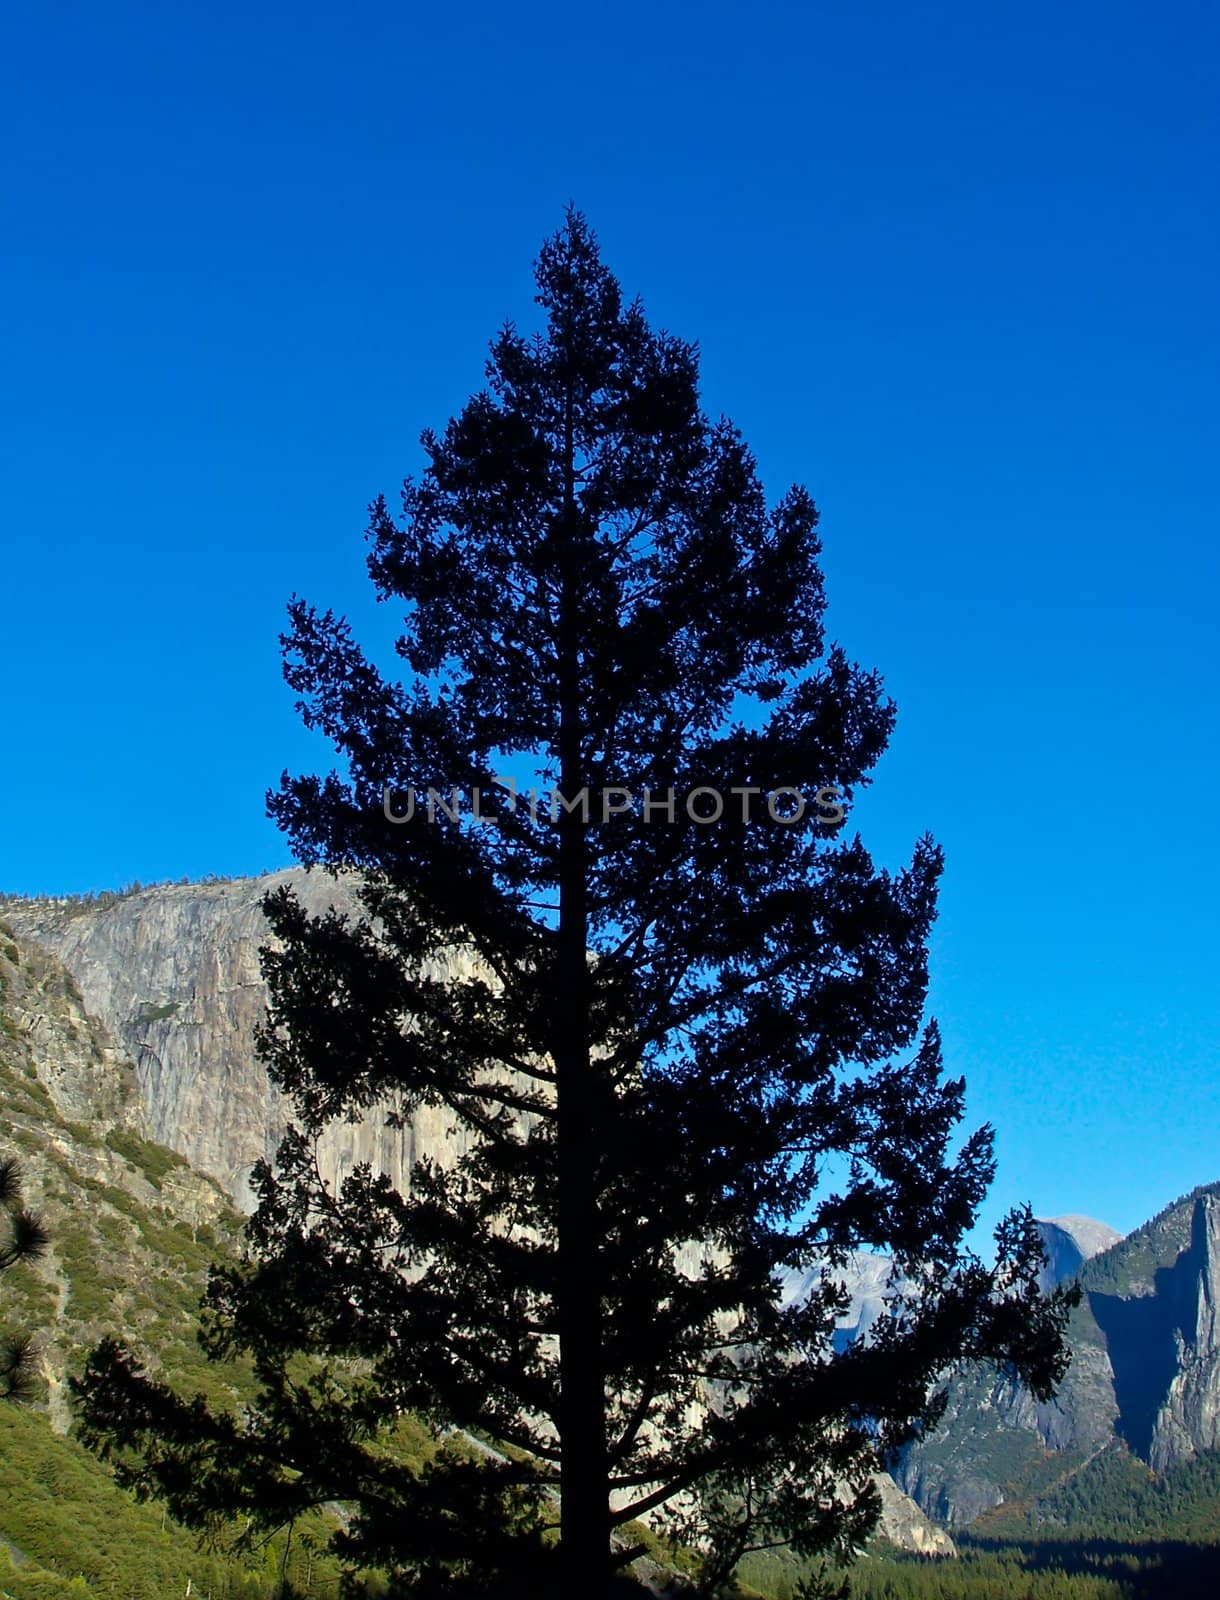 Yosemite evergreen silhouetted against blue sky in Sierra Nevada mountain range